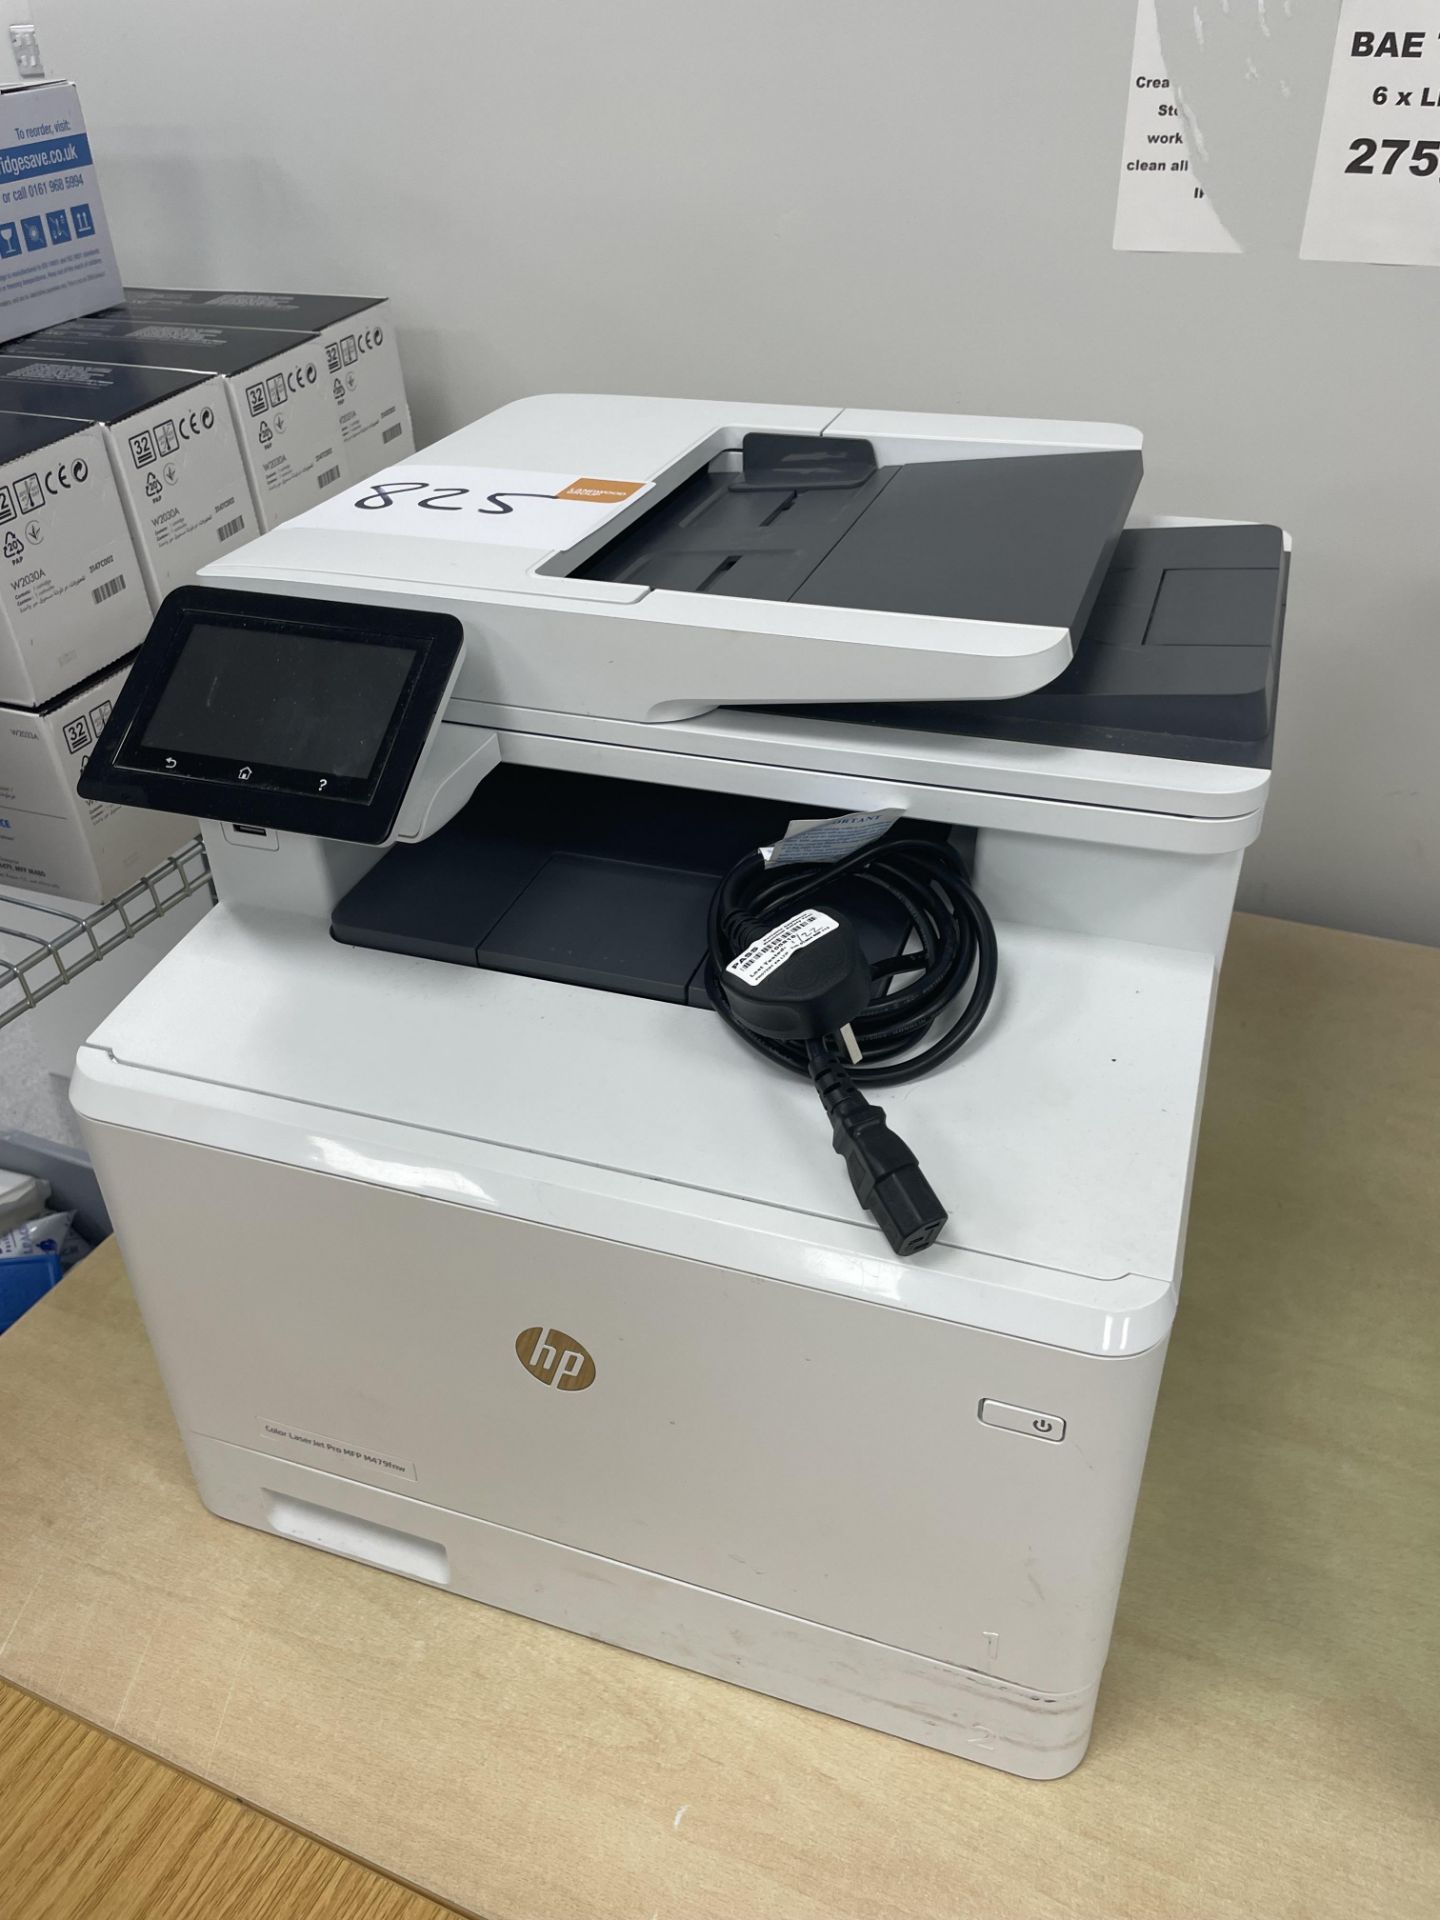 A HP Color LaserJet Pro MFP M479fnw multi functional printer.